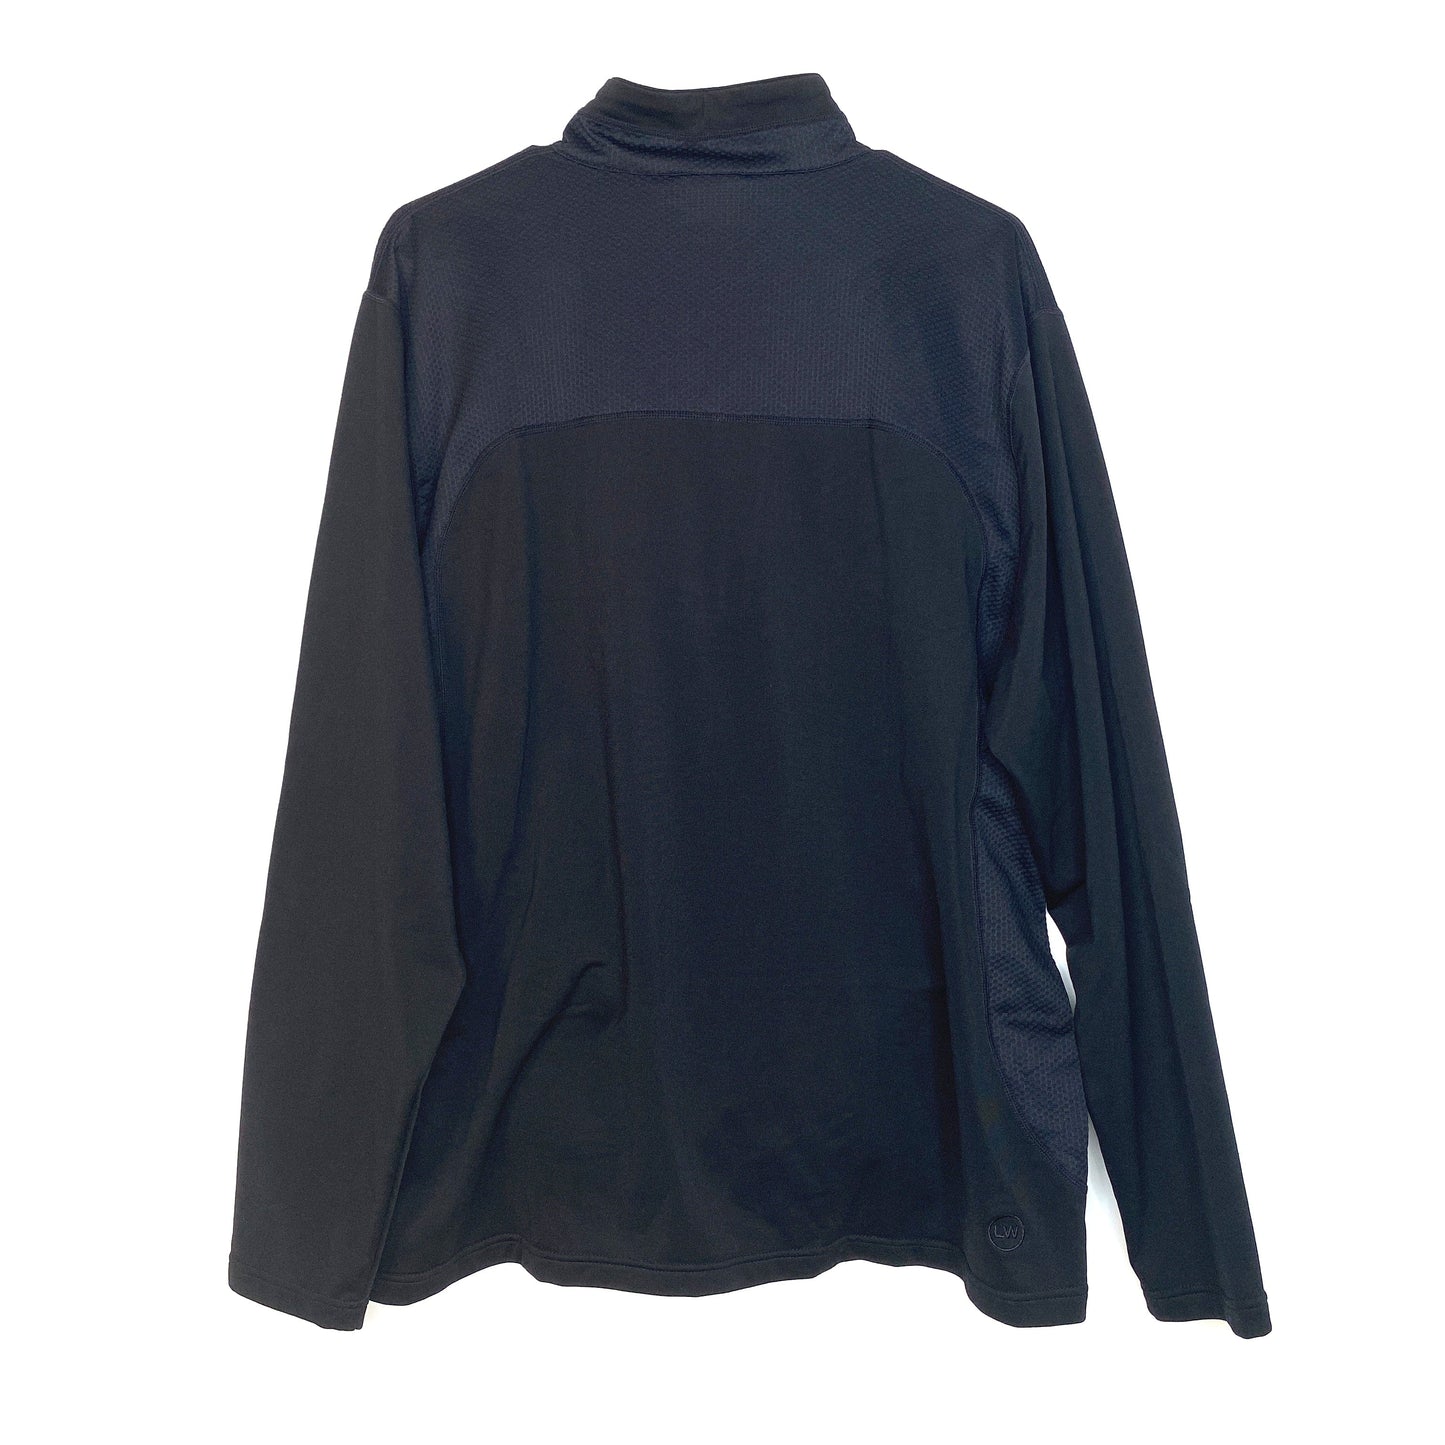 LevelWear Mens Size XL Black Sweatshirt Football Carolina Panthers Pullover 1/4 Zip L/s